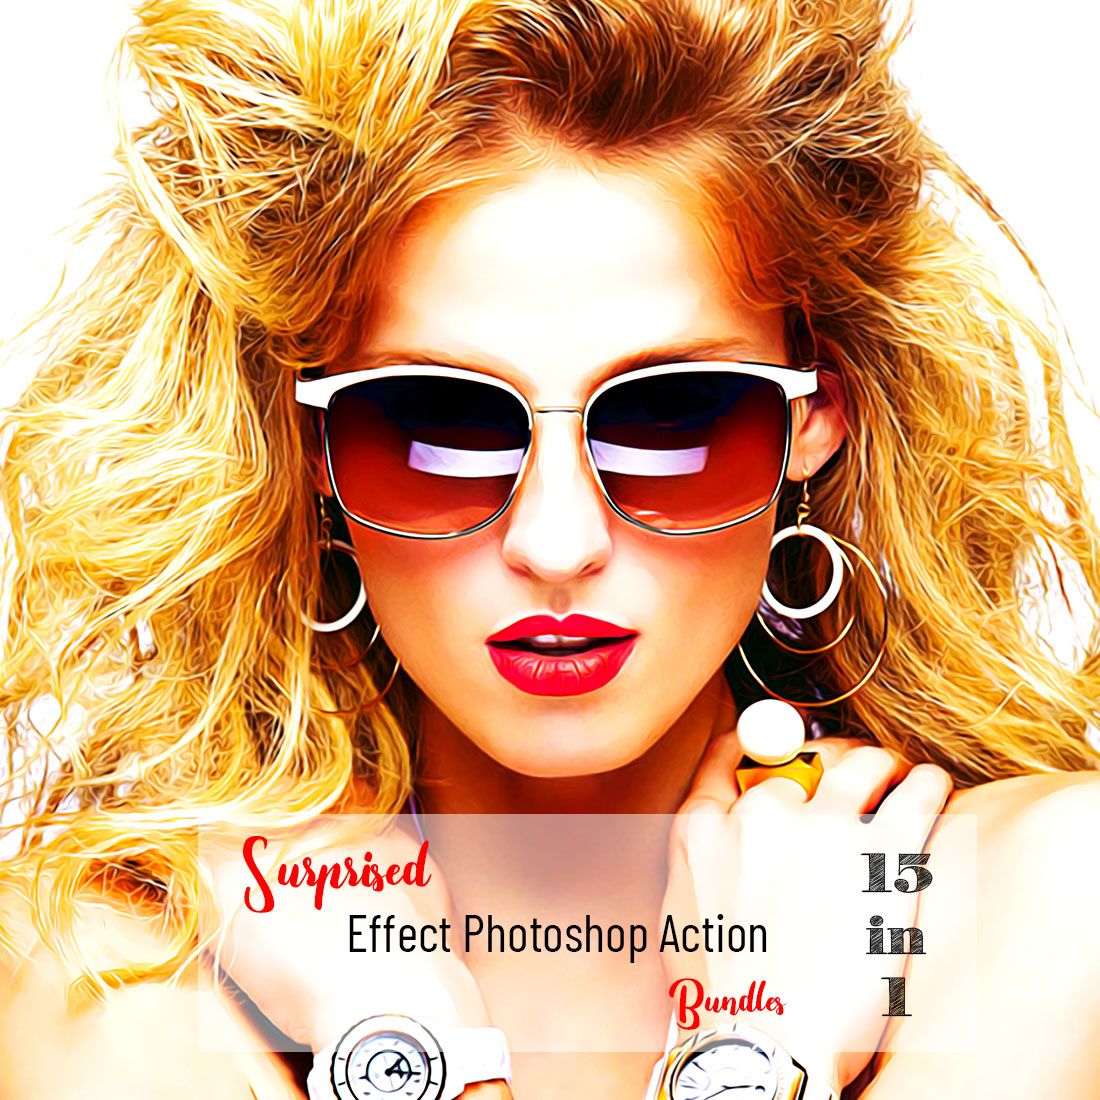 Surprised Effect Photoshop Action Bundles cover image.